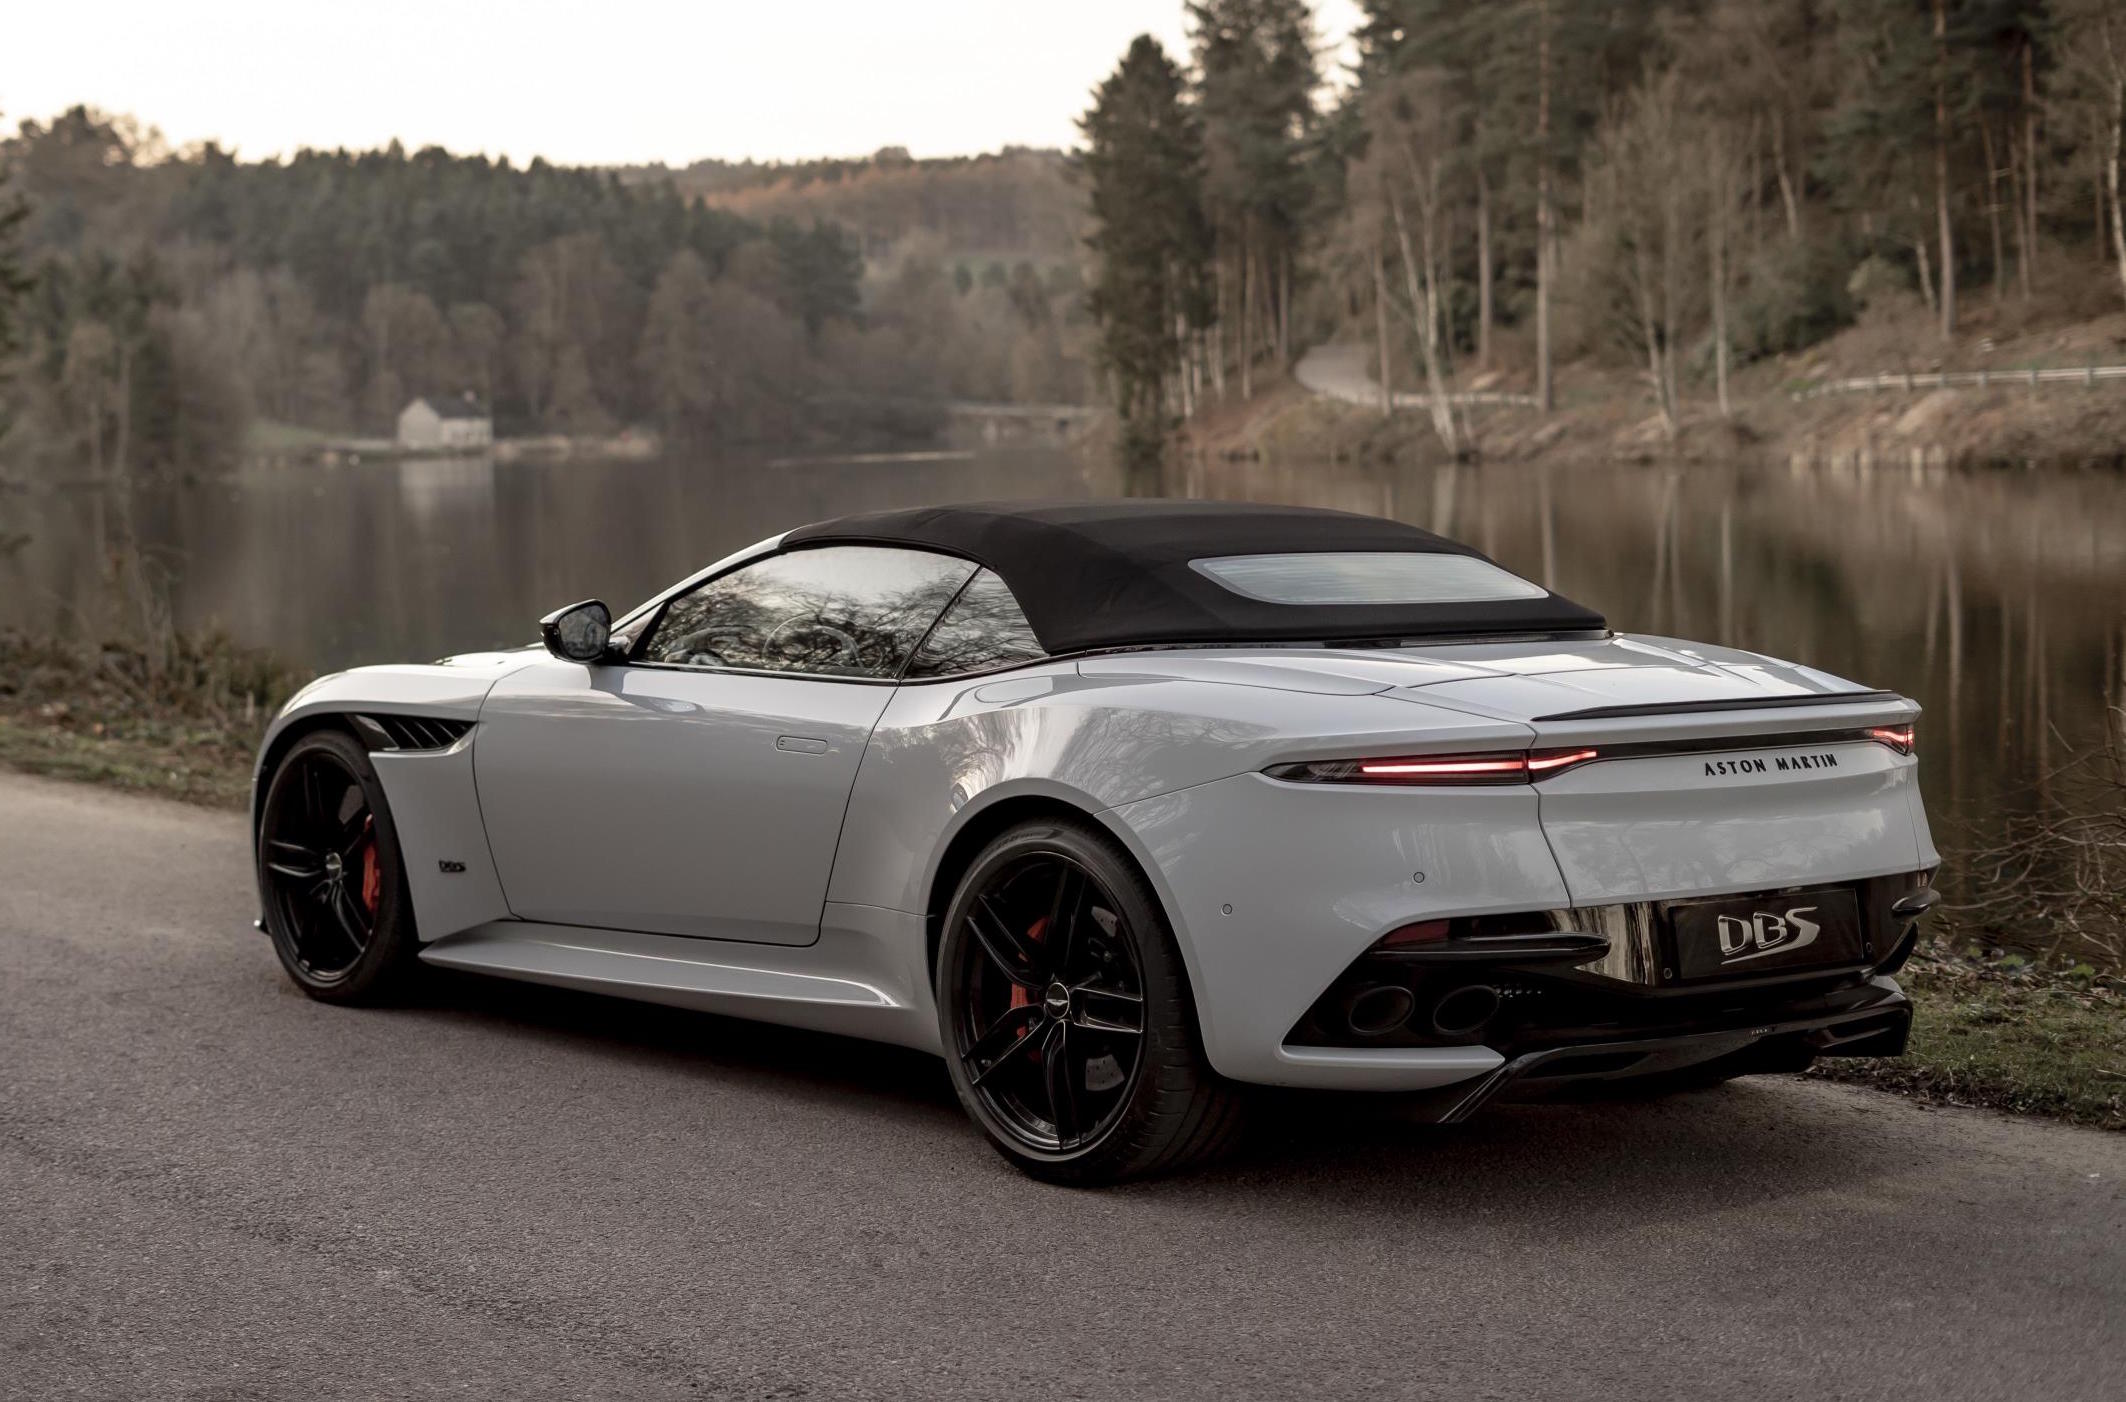 Aston Martin DBS Superleggera Volante convertible revealed